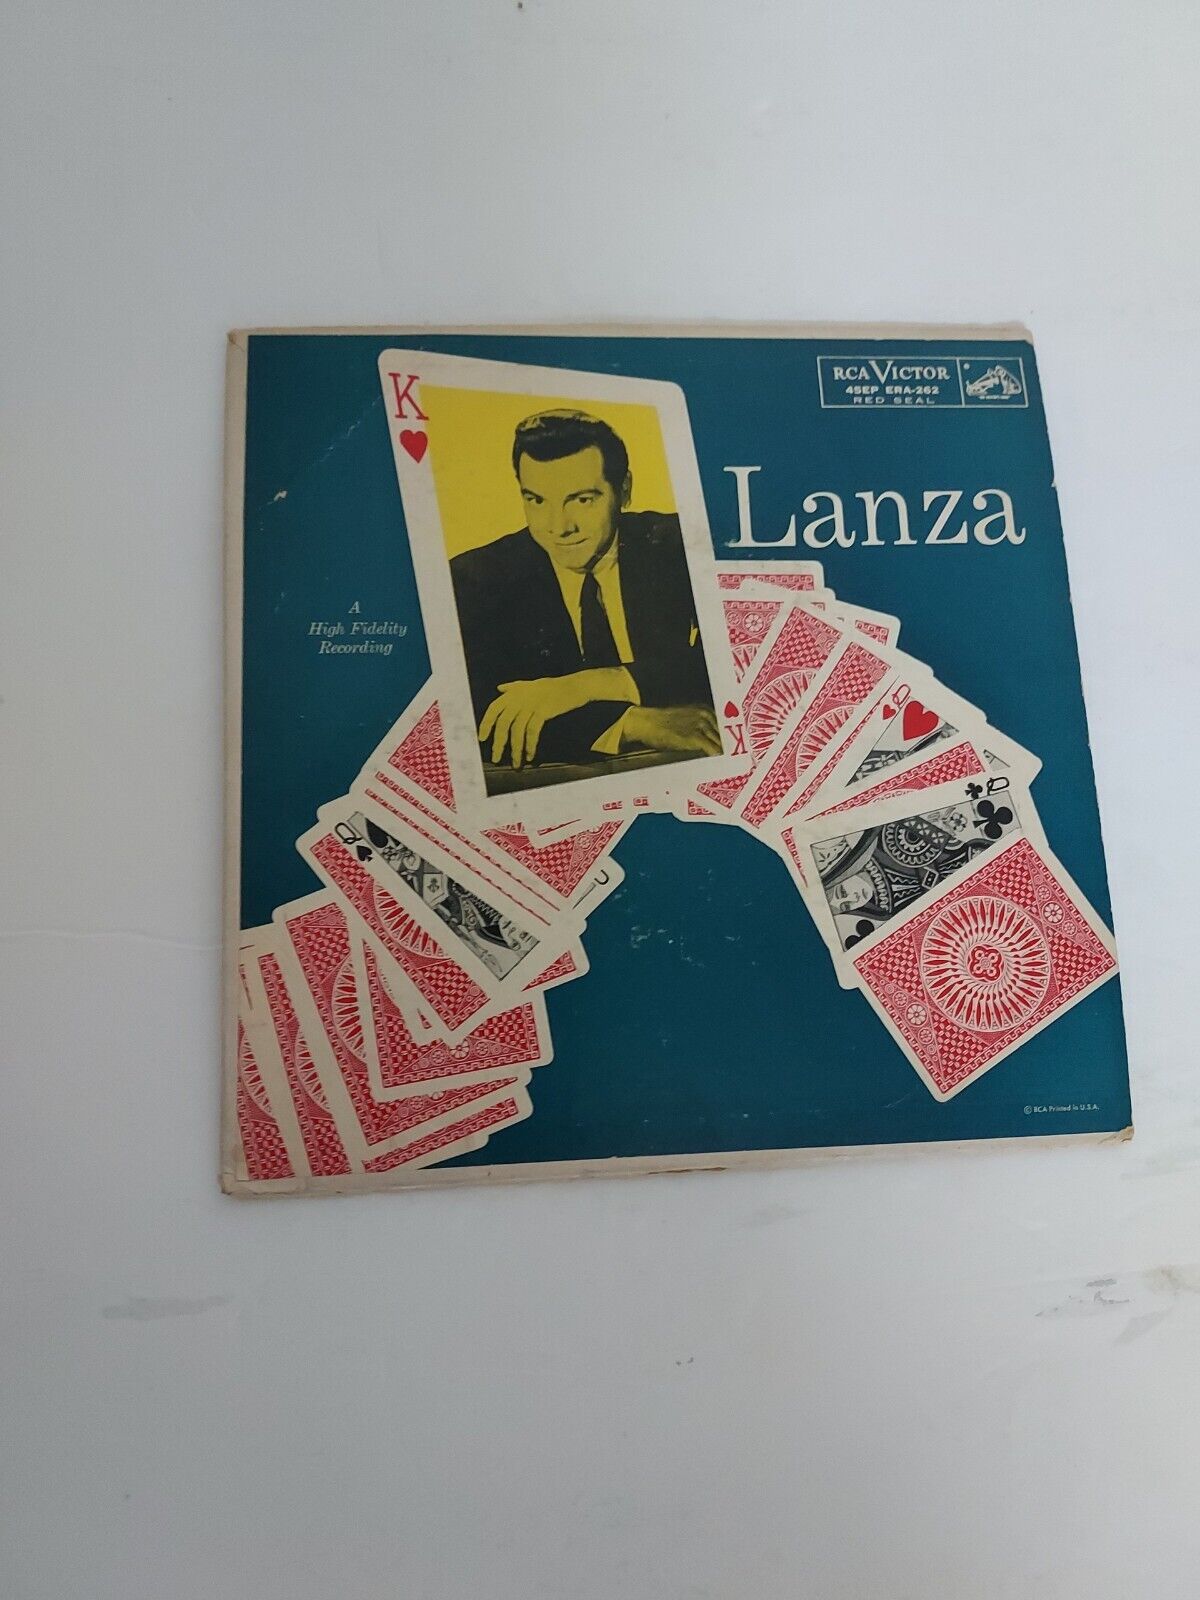 45 RPM Vinyl Record Mario Lanza Lanza VG